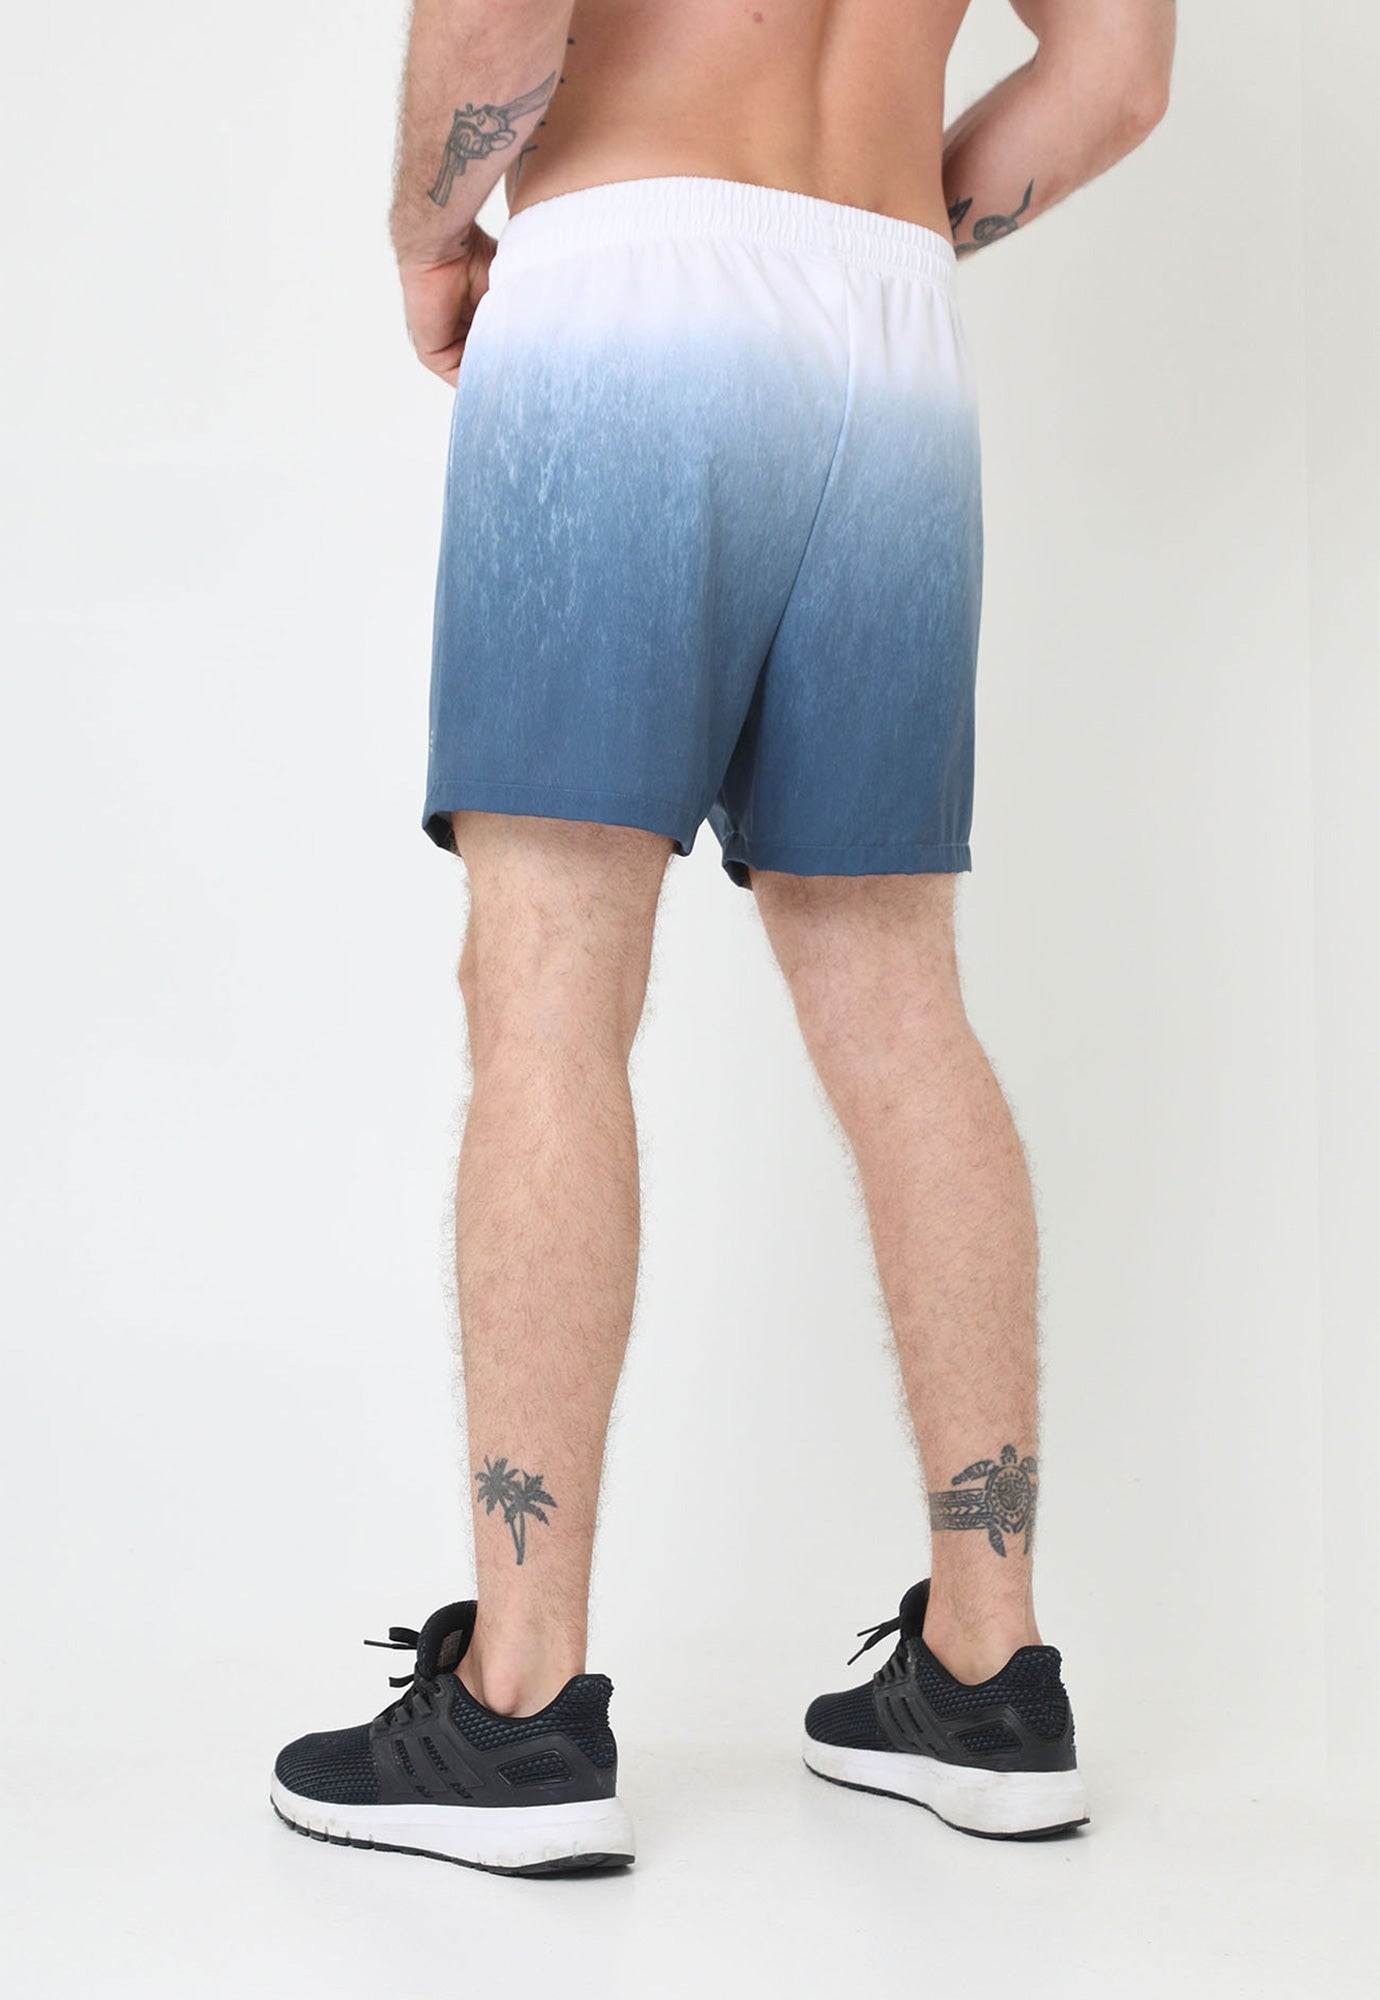 Pantaloneta deportiva azul, sublimada, bolsillos laterales y pretina ajustada para hombre